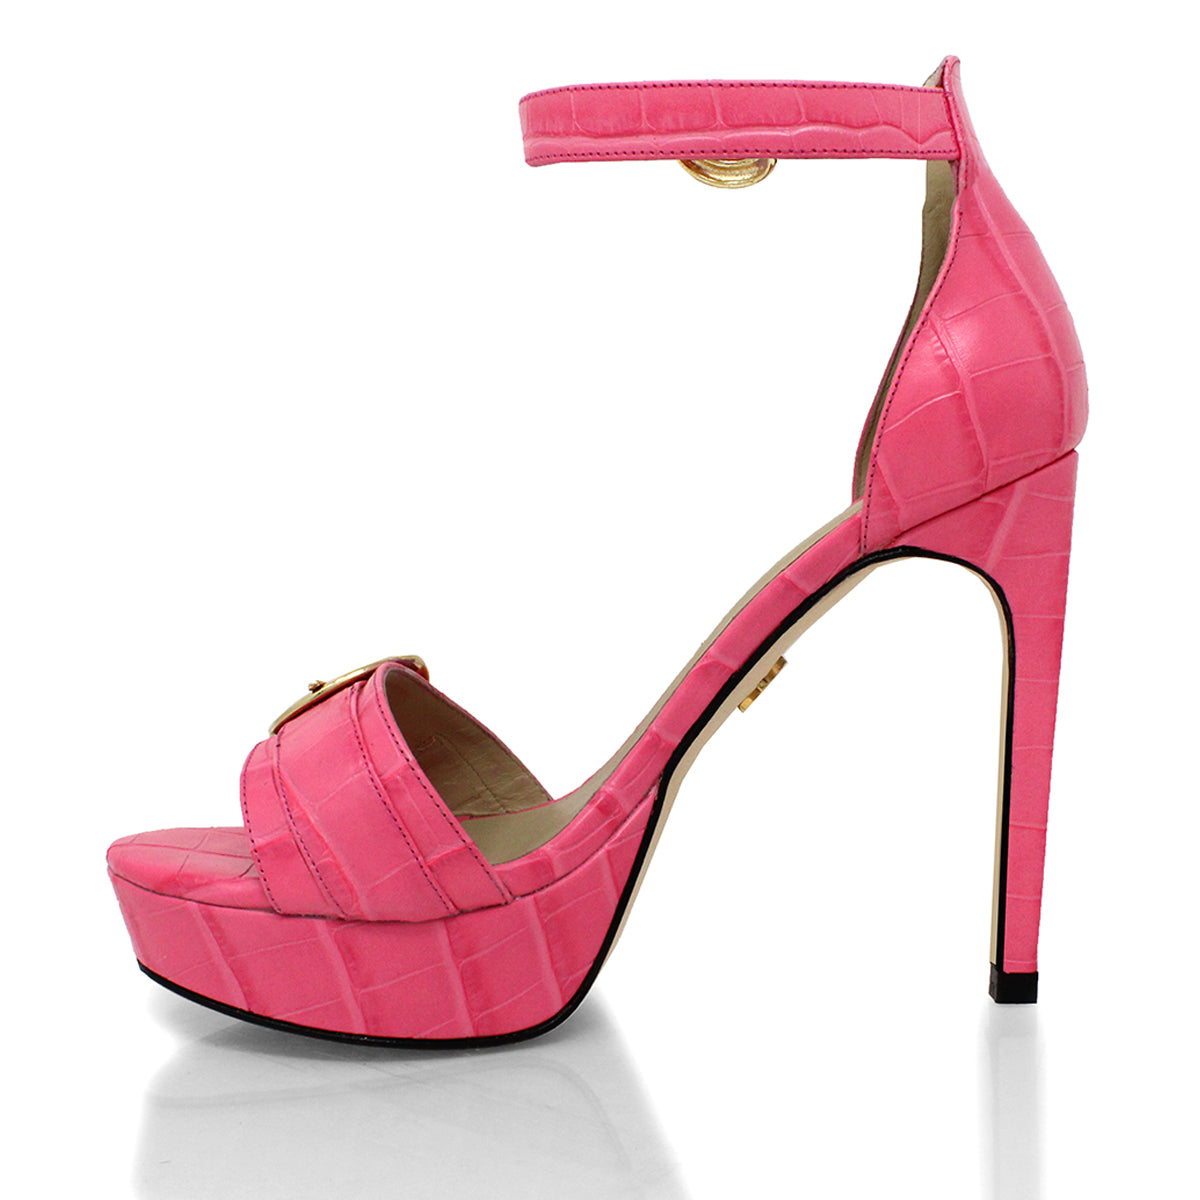 TROPEZ 135 - Rosa Regina Romero High Heel Platform Sandal Shoe for Women in Leather